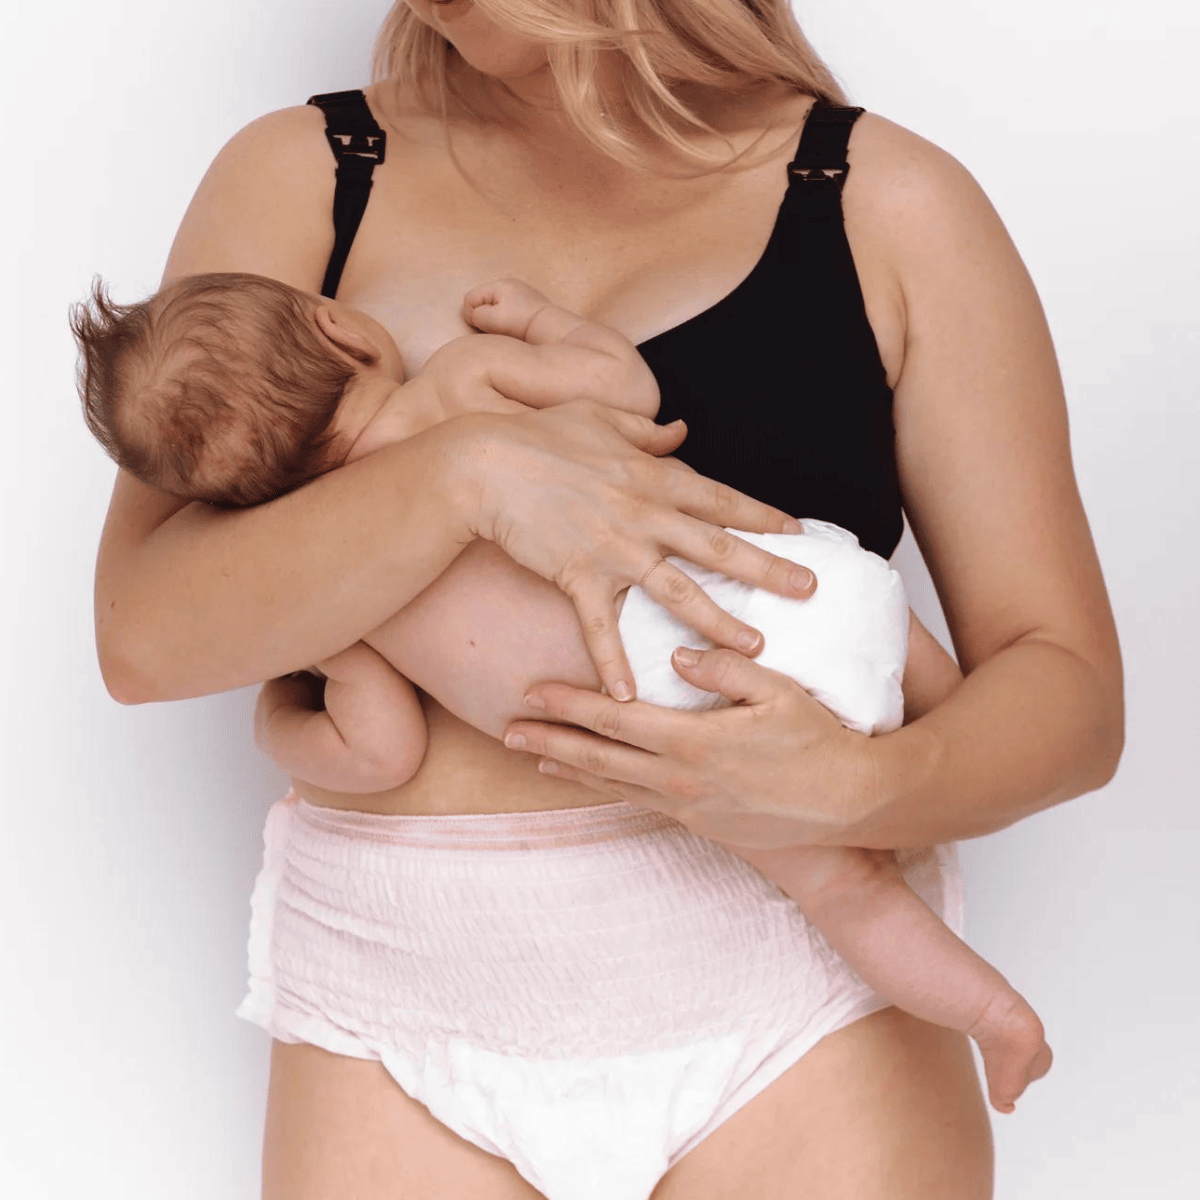 Nature's Child Organic Cotton Reusable Breast Pads Pkt 6